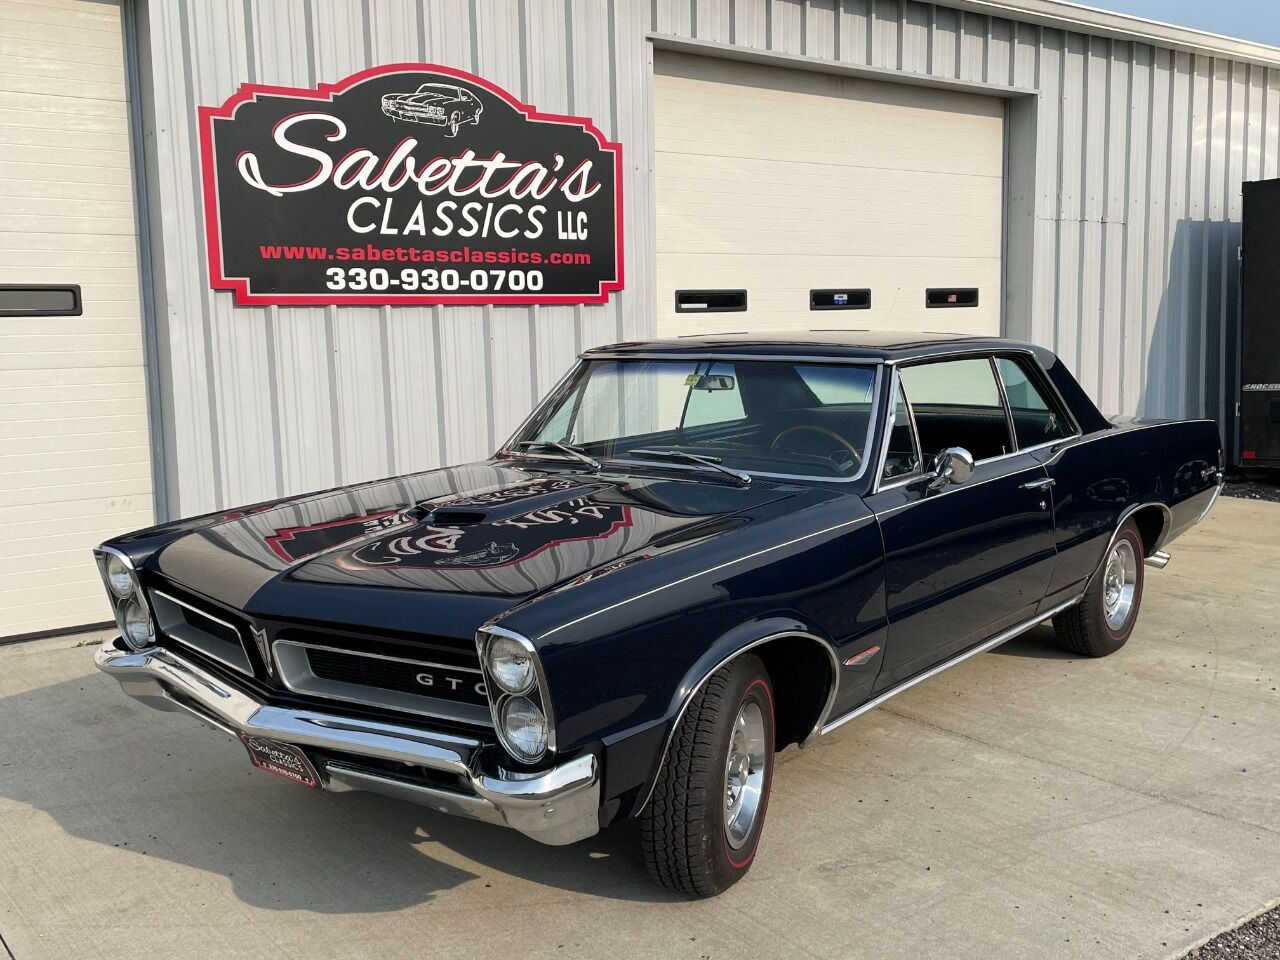 Classic Cars For Sale In Ohio - Carsforsale.com®